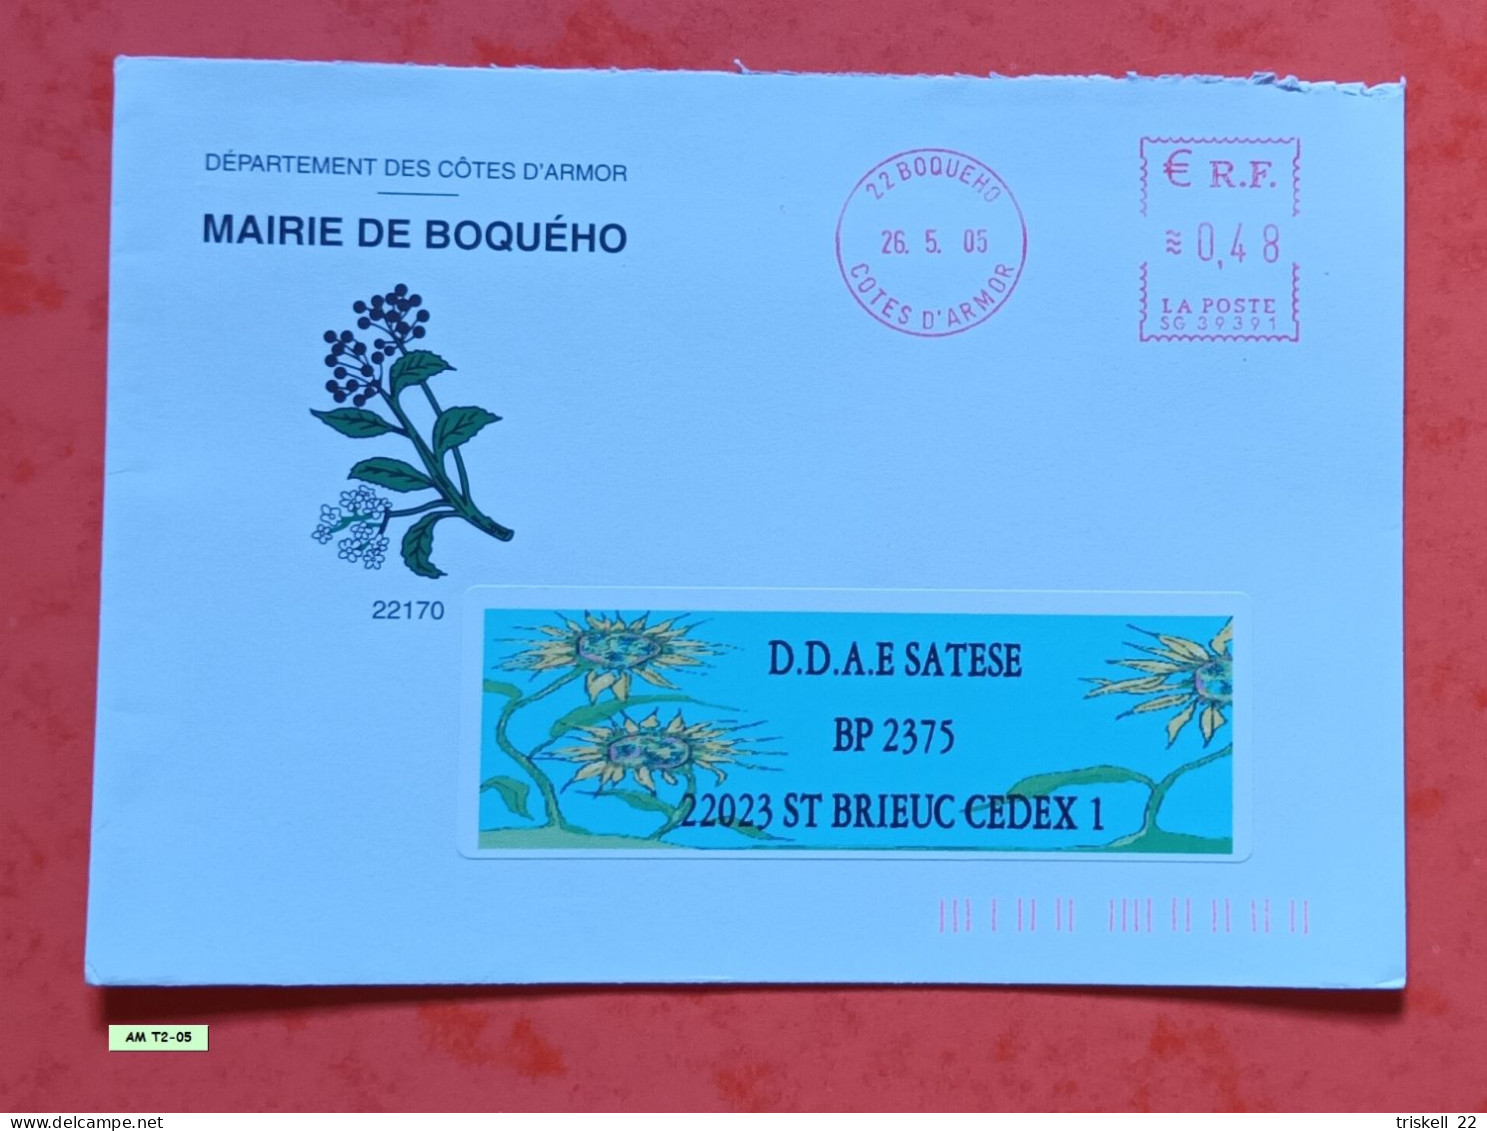 Mairie De Boquého - Oblitération Du 26-05-2005 - Mechanical Postmarks (Other)